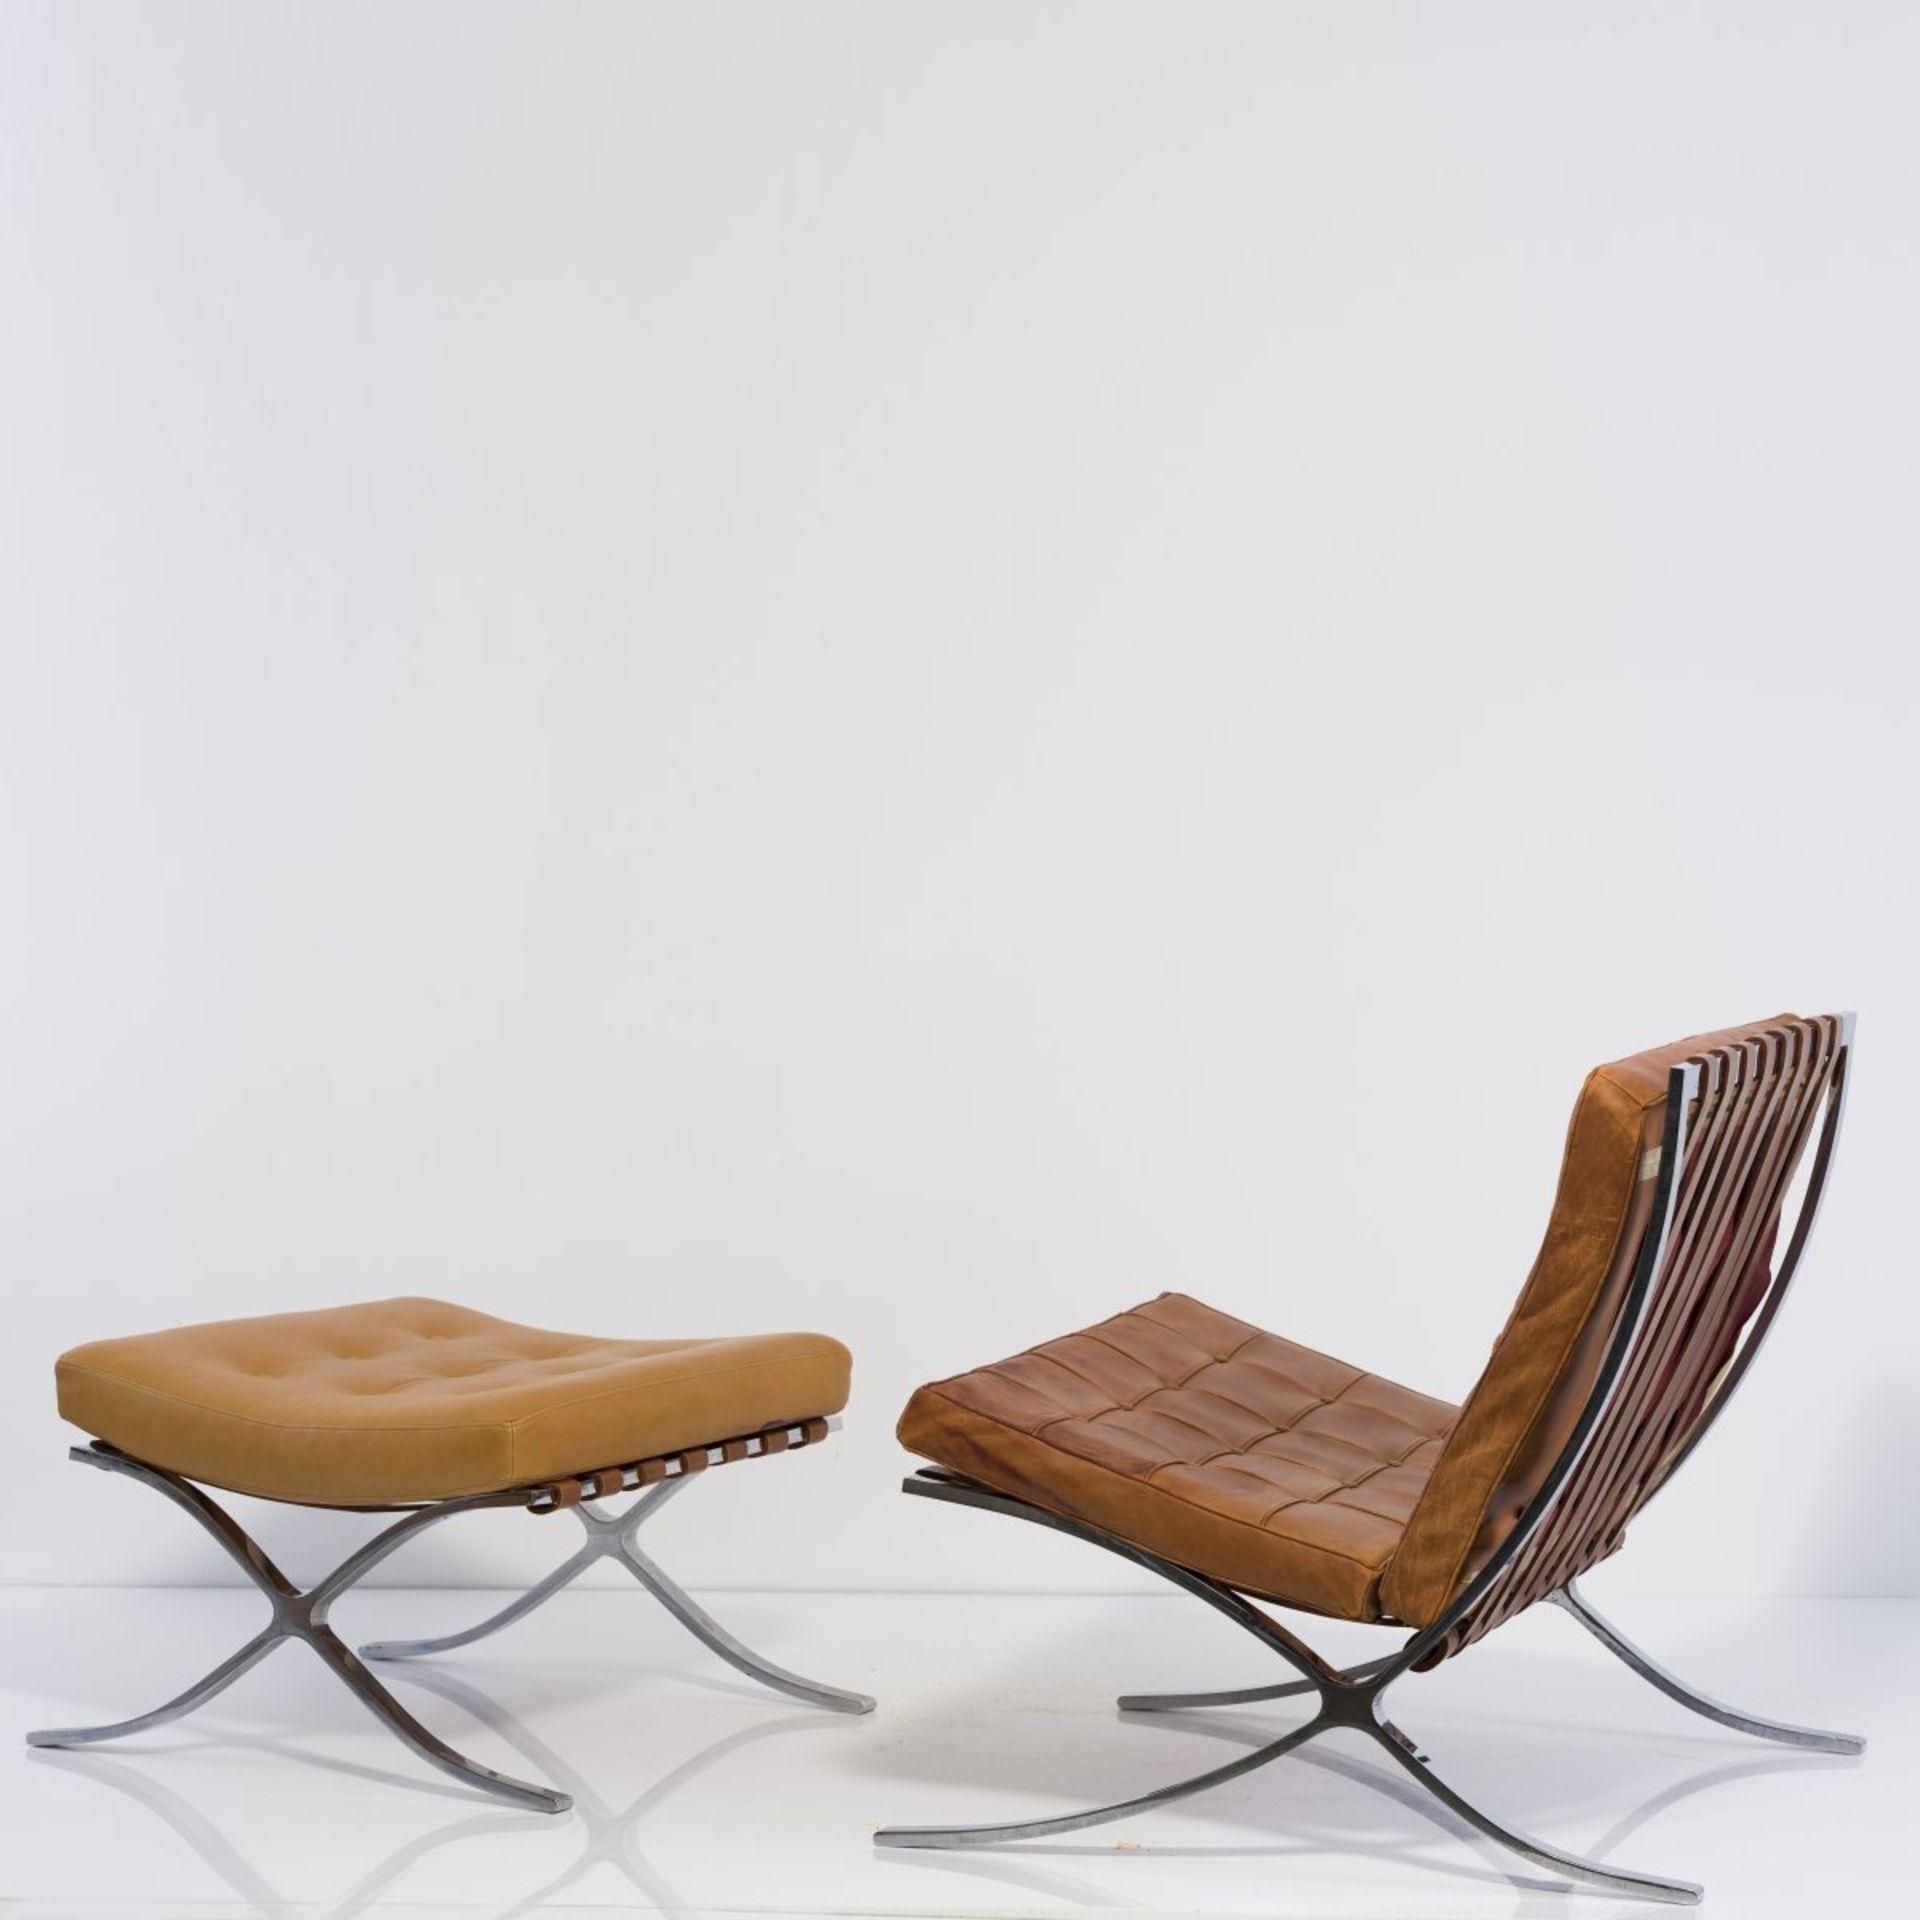 Ludwig Mies van der Rohe, Sessel 'Barcelona chair' mit Ottoman, 1929 - Bild 2 aus 2